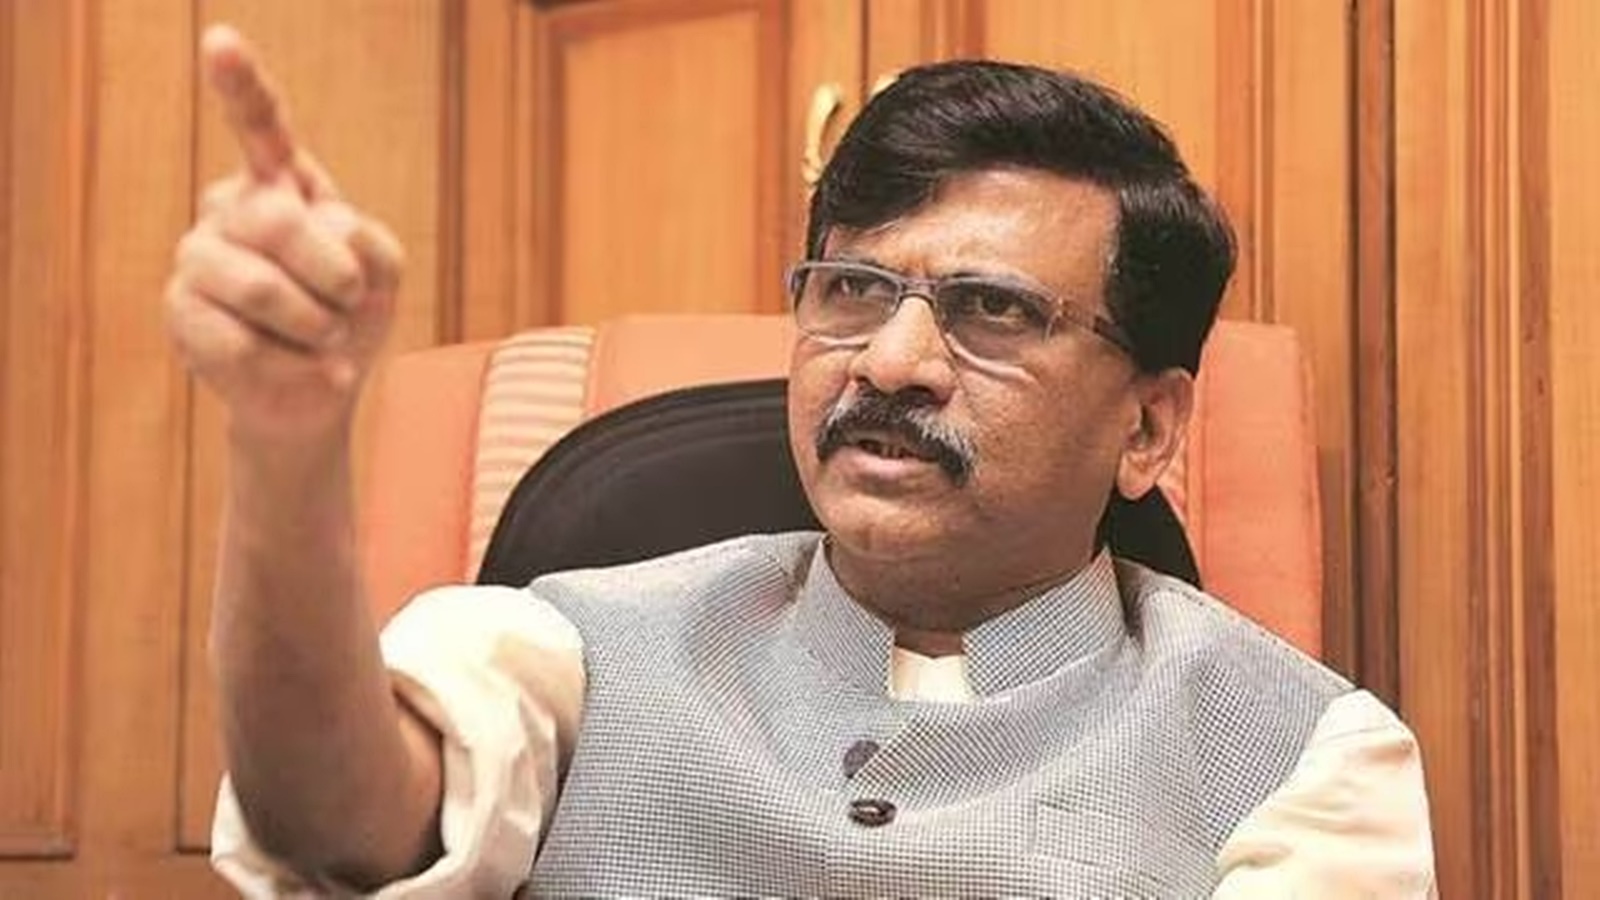 In Nashik, Sanjay Raut bitterly said that if there was no Shiv Sena